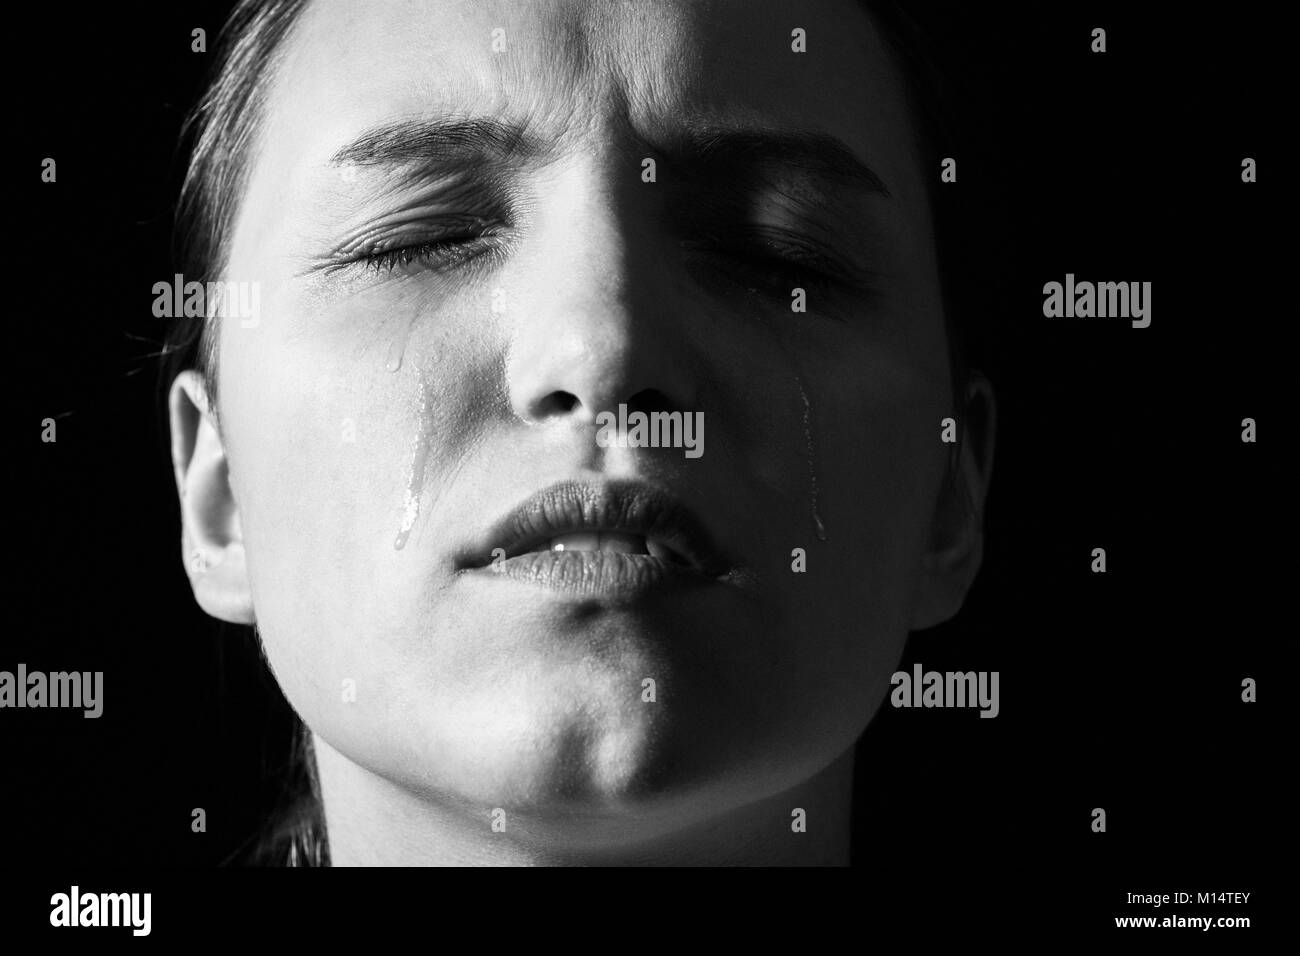 sad woman crying on black background, closeup portrait monochrome Stock Photo